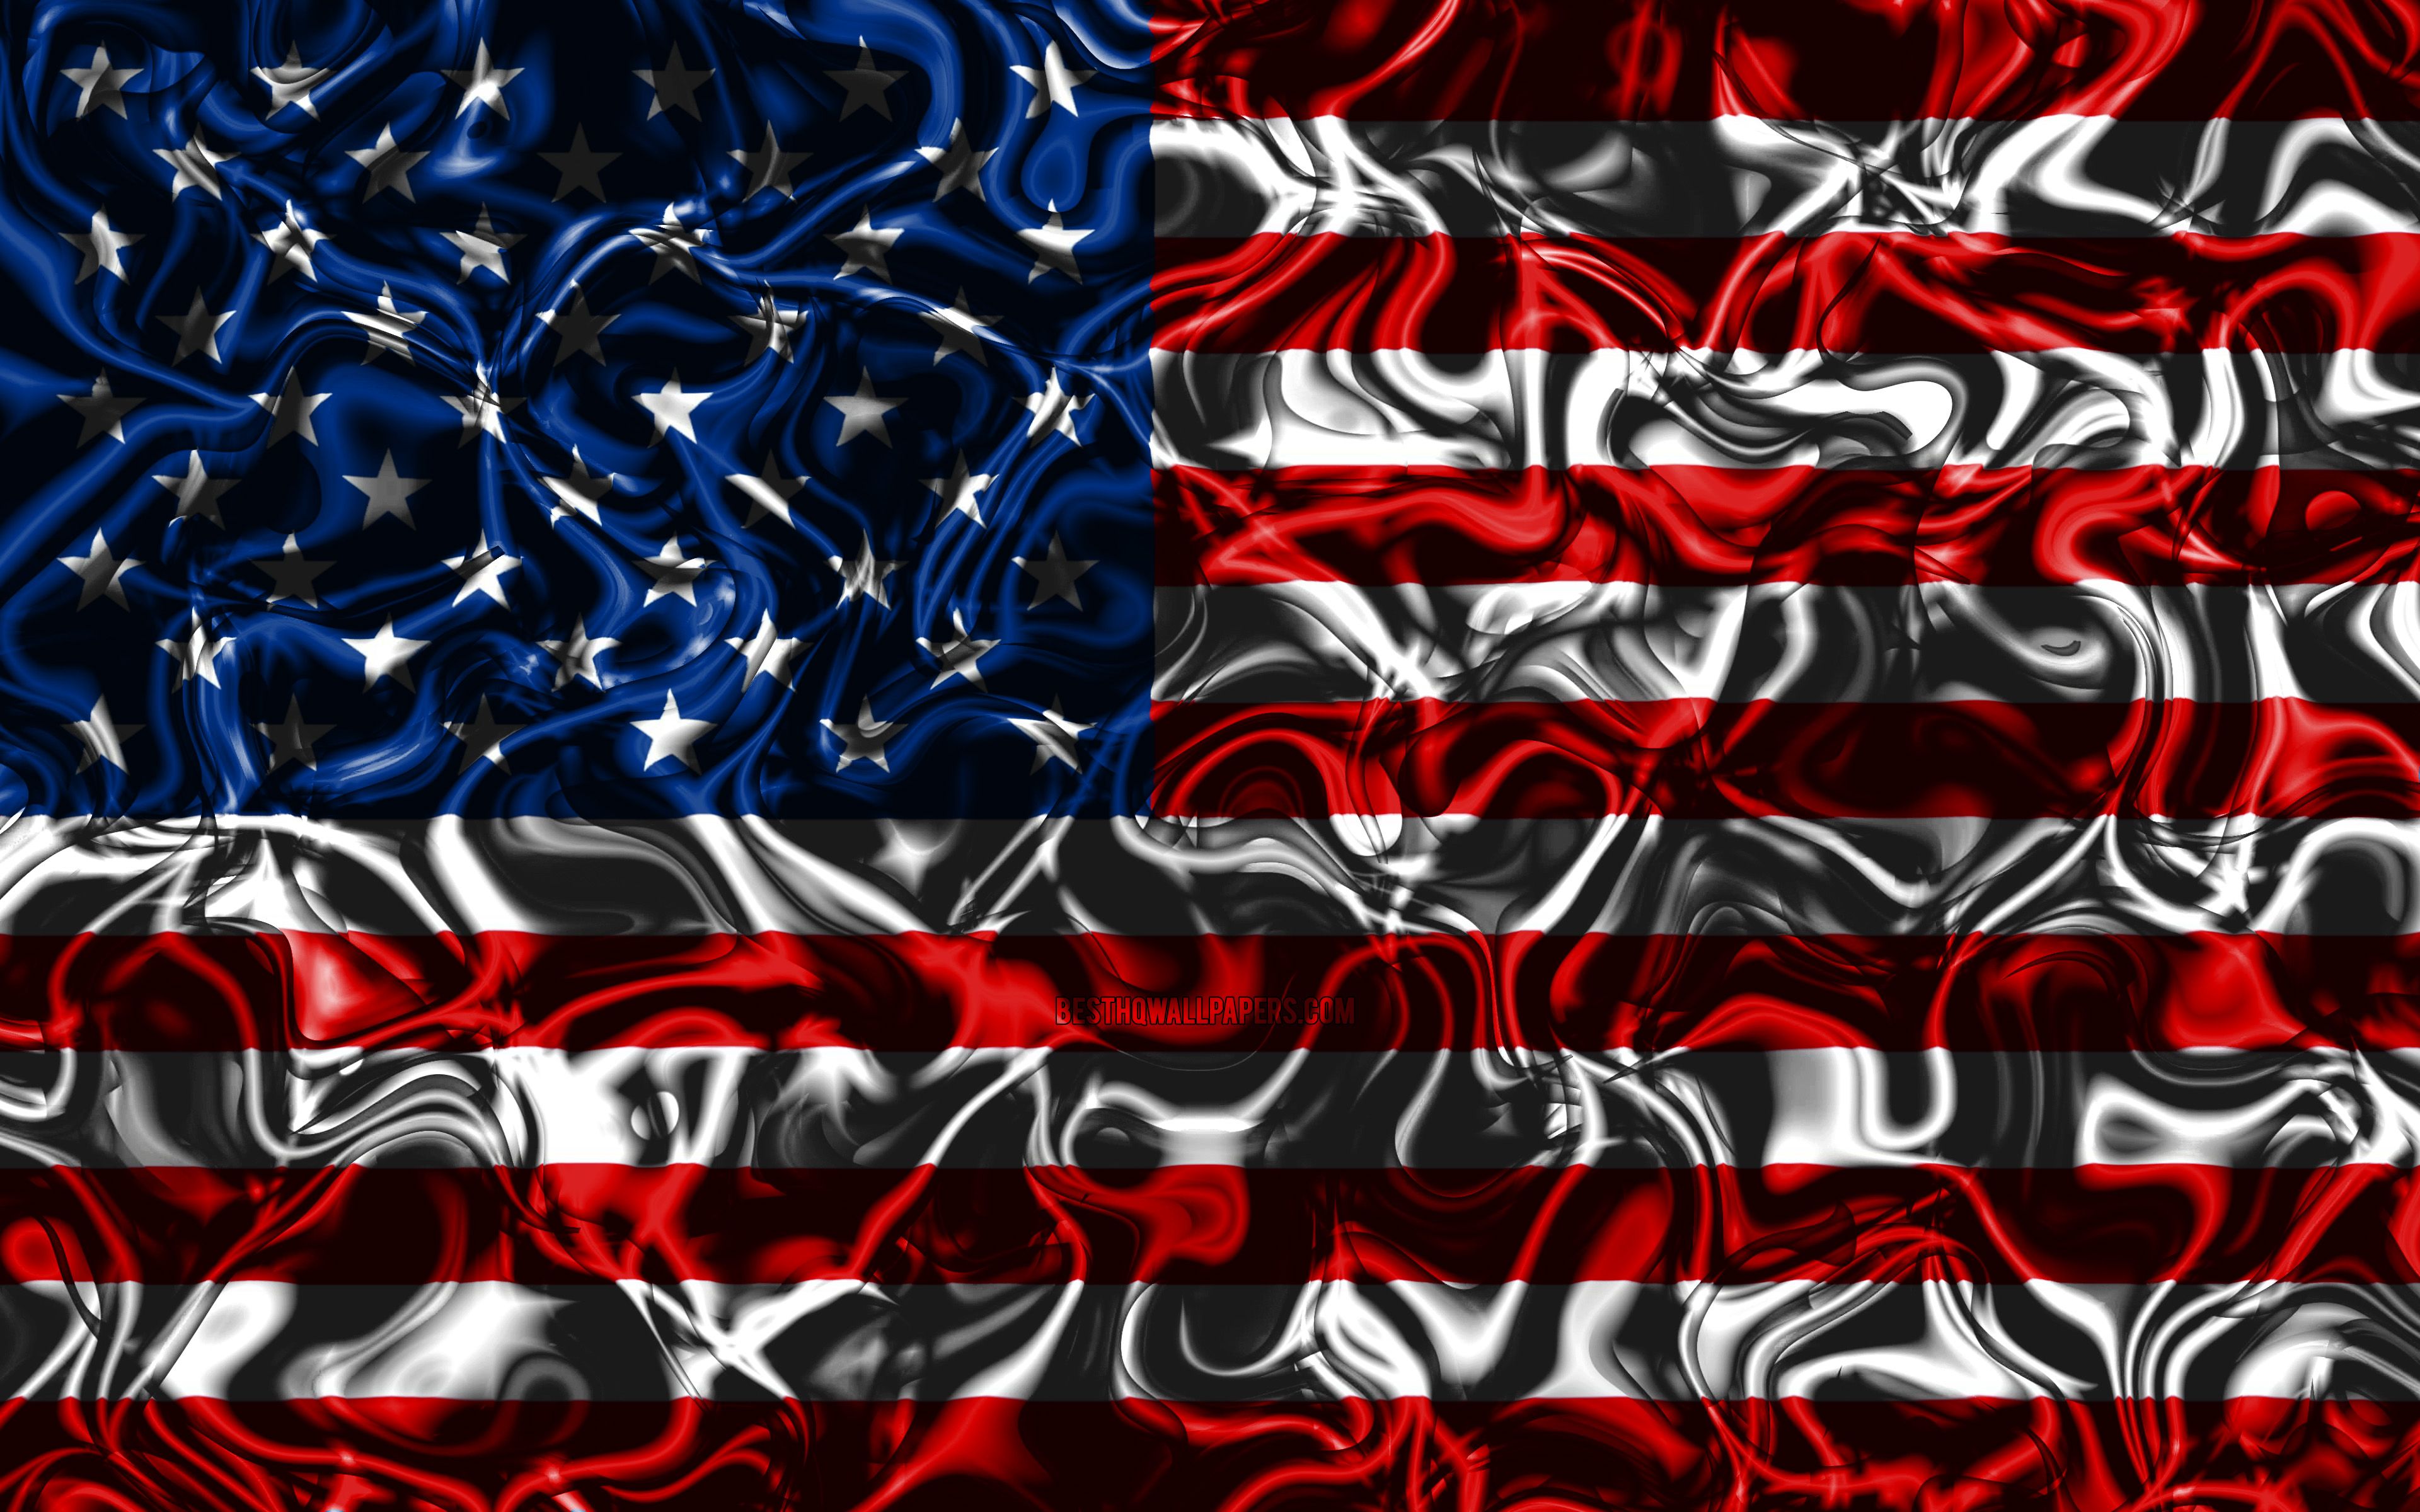 Download wallpaper 4k, Flag of USA, abstract smoke, United States of America, North America, US flag, national symbols, USA flag, 3D art, USA 3D flag, creative, North American countries, USA for desktop